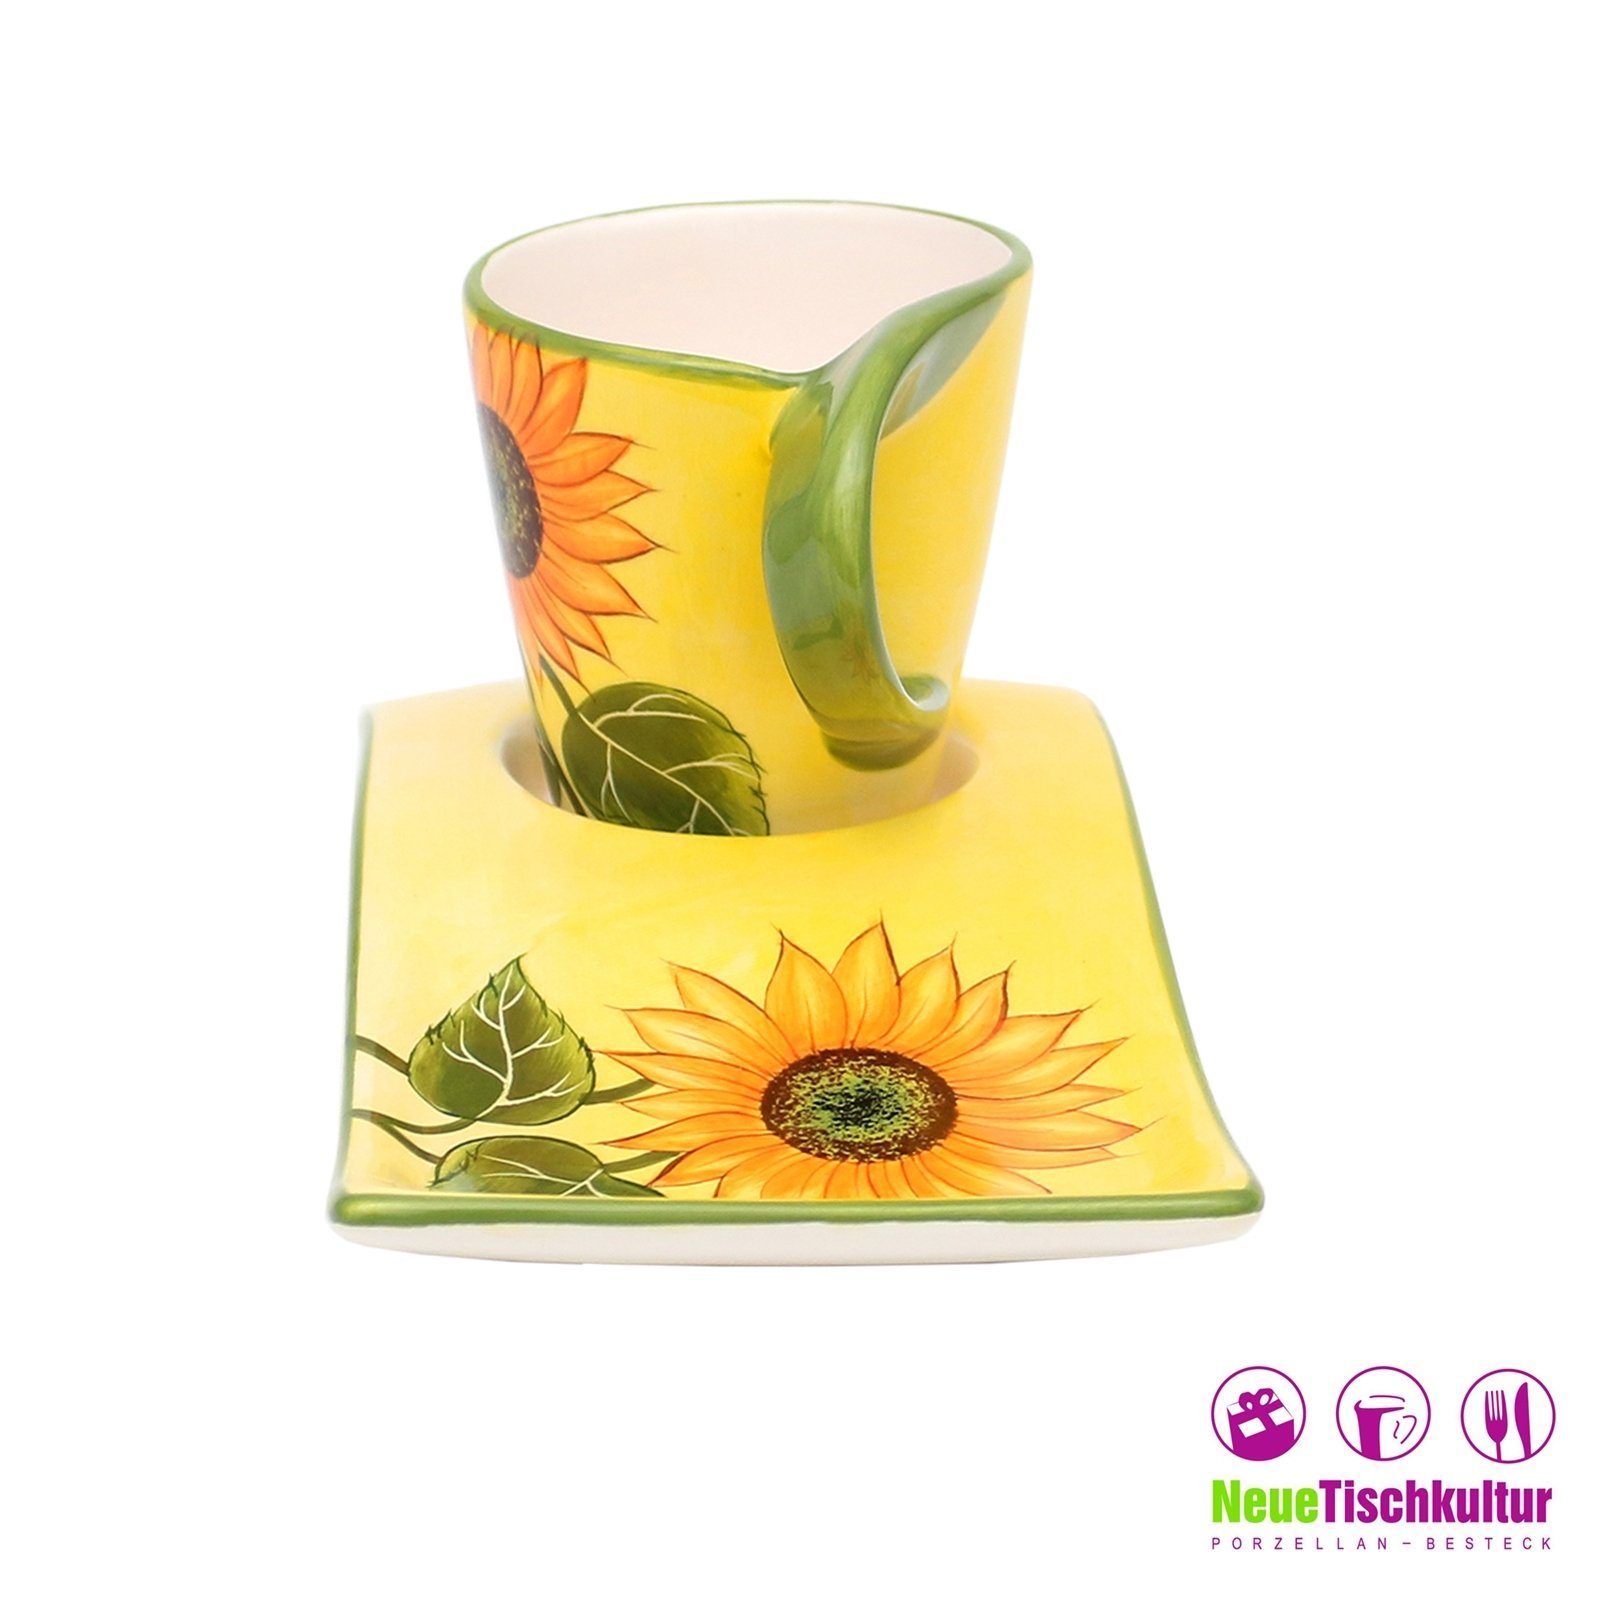 Tasse Keramik, mit Neuetischkultur mit Kaffeepot Kaffeebecher Kaffeetasse Unterteller Gebäckteller Sonnenblume 2er-Set,